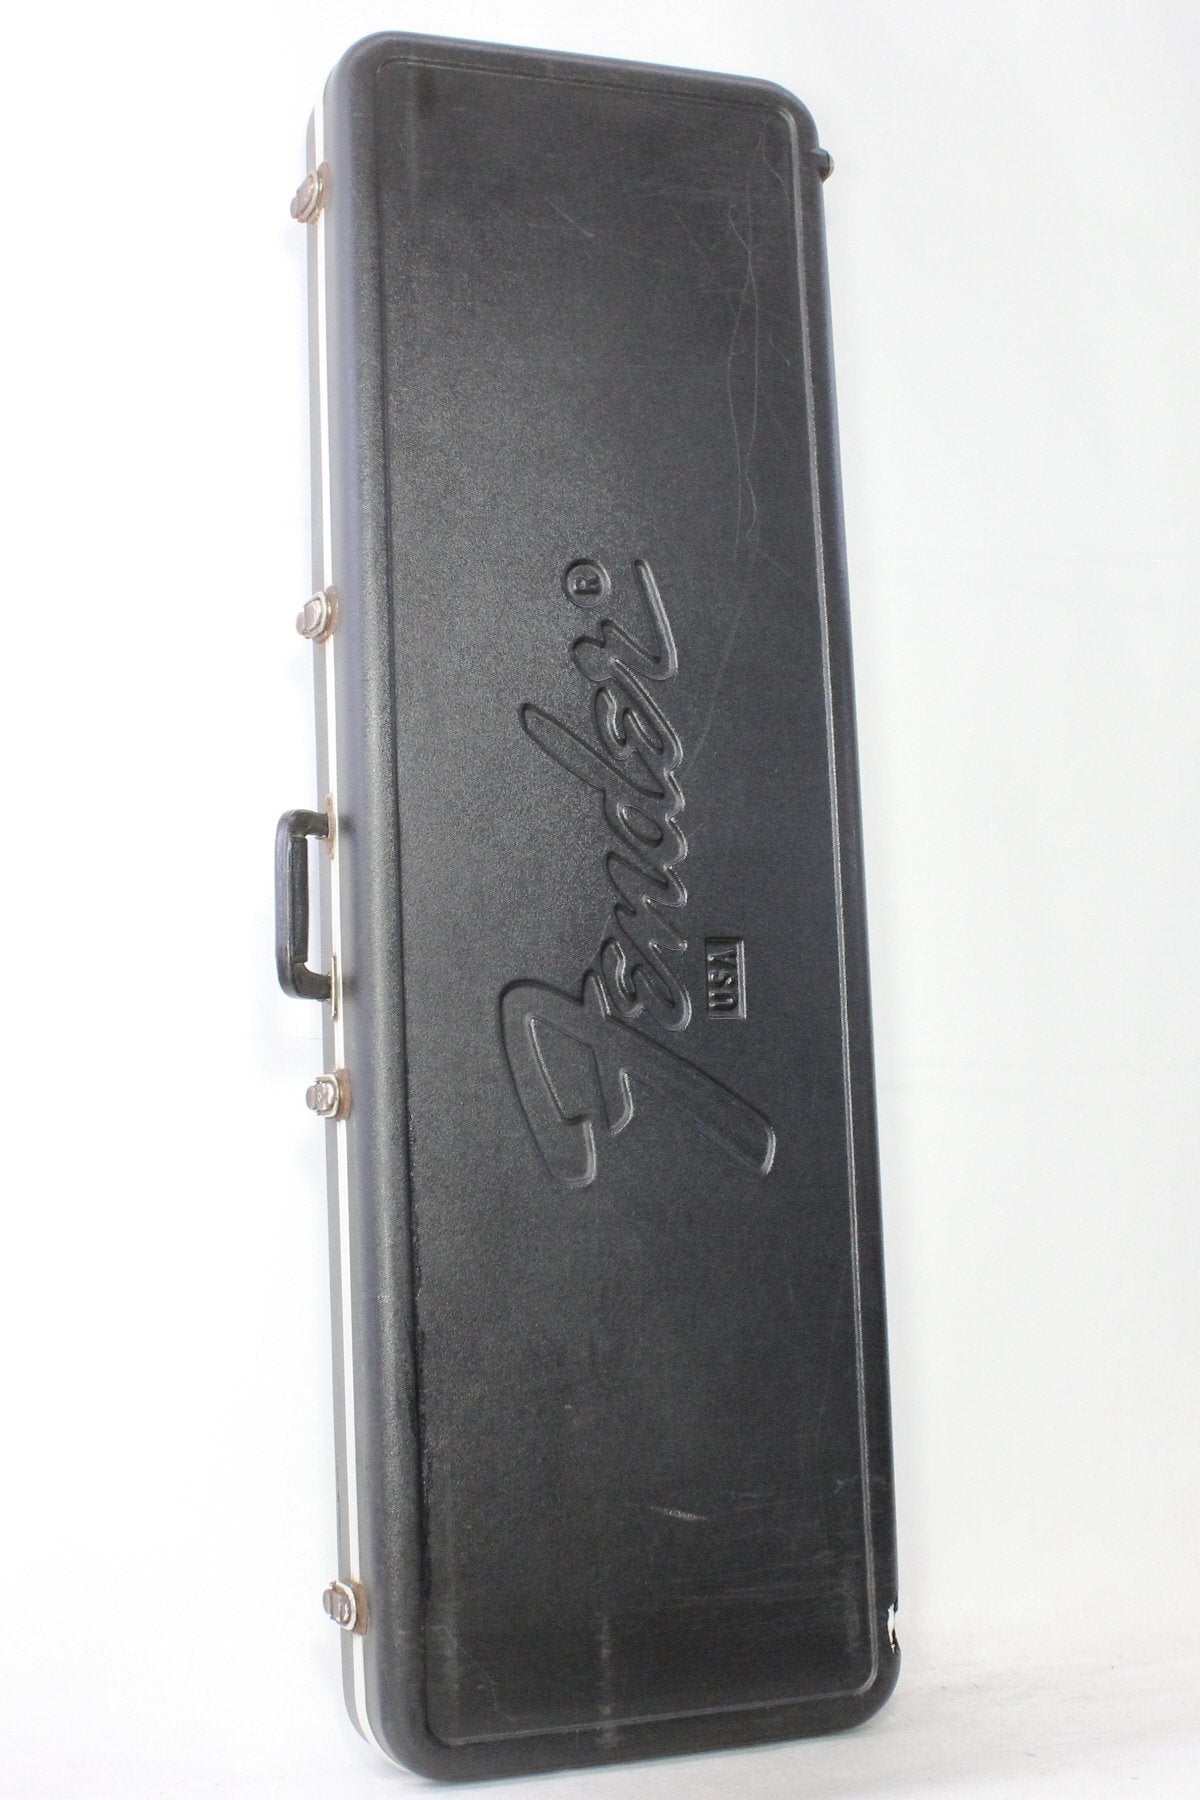 [SN E91987] USED Fender USA / American Standard Jazz Bass Longhorn Sunburst Rosewood Fingerboard [03]